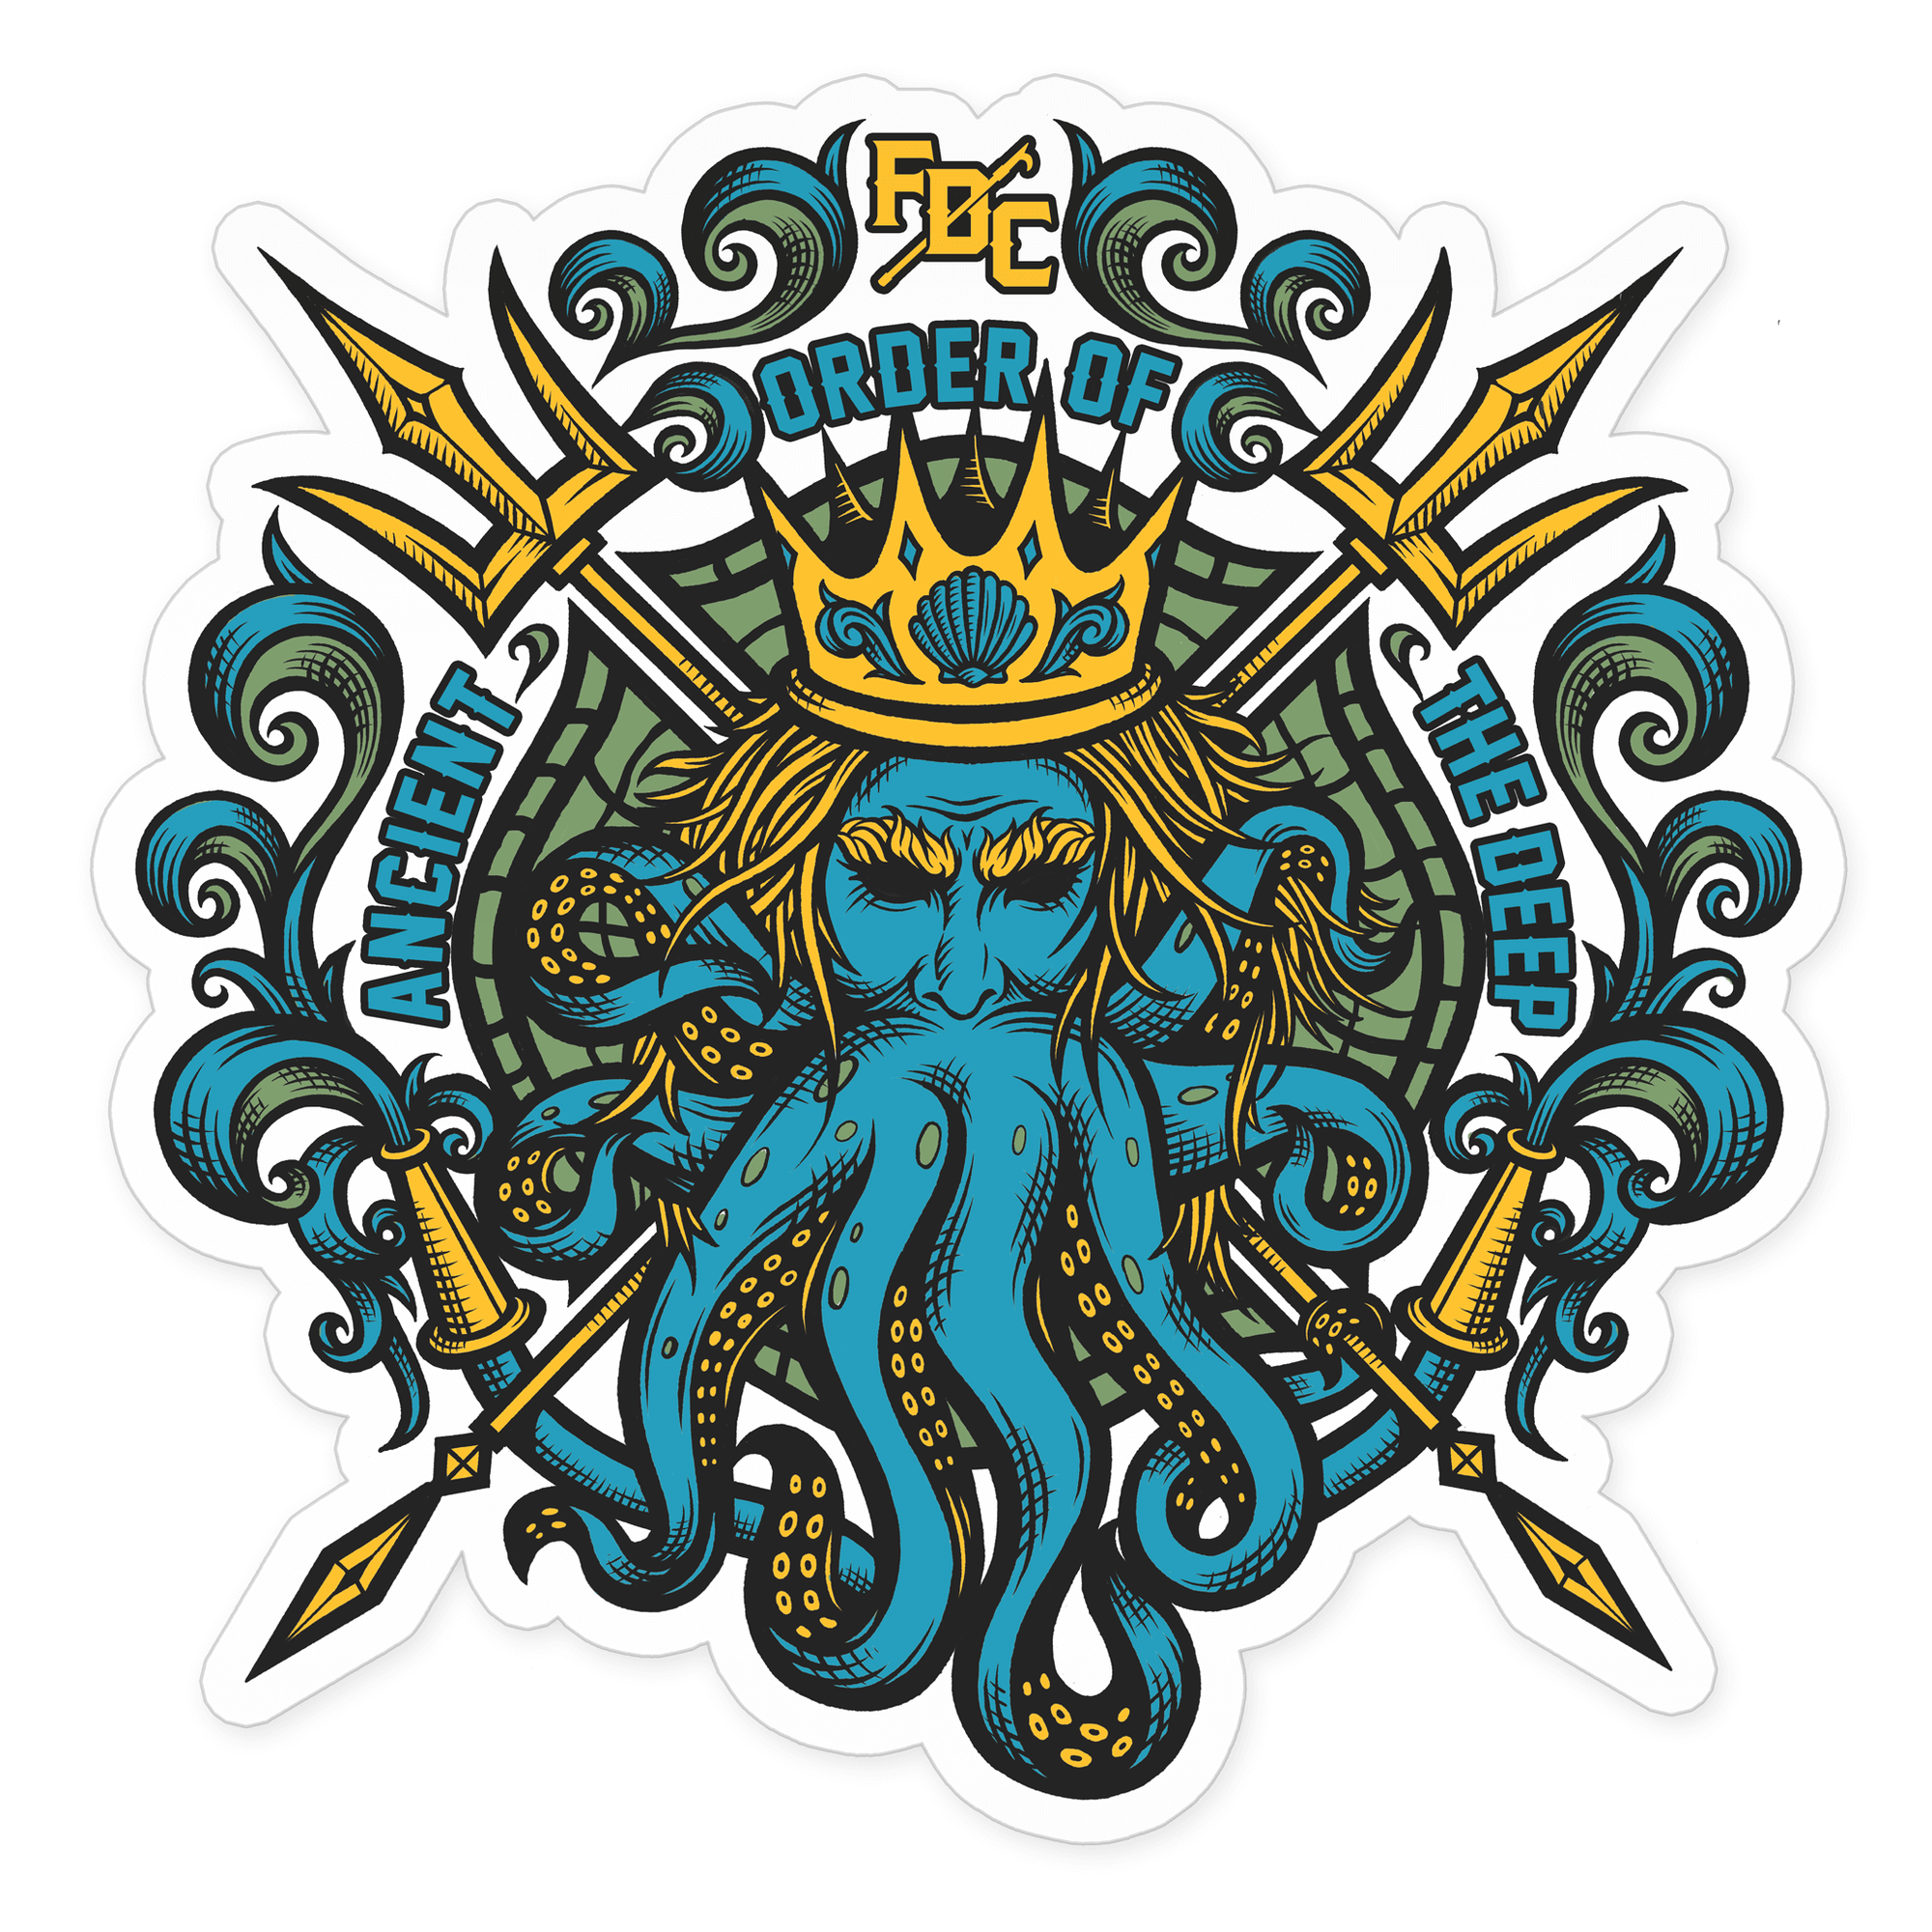 A sticker of Shellback's octopus logo.